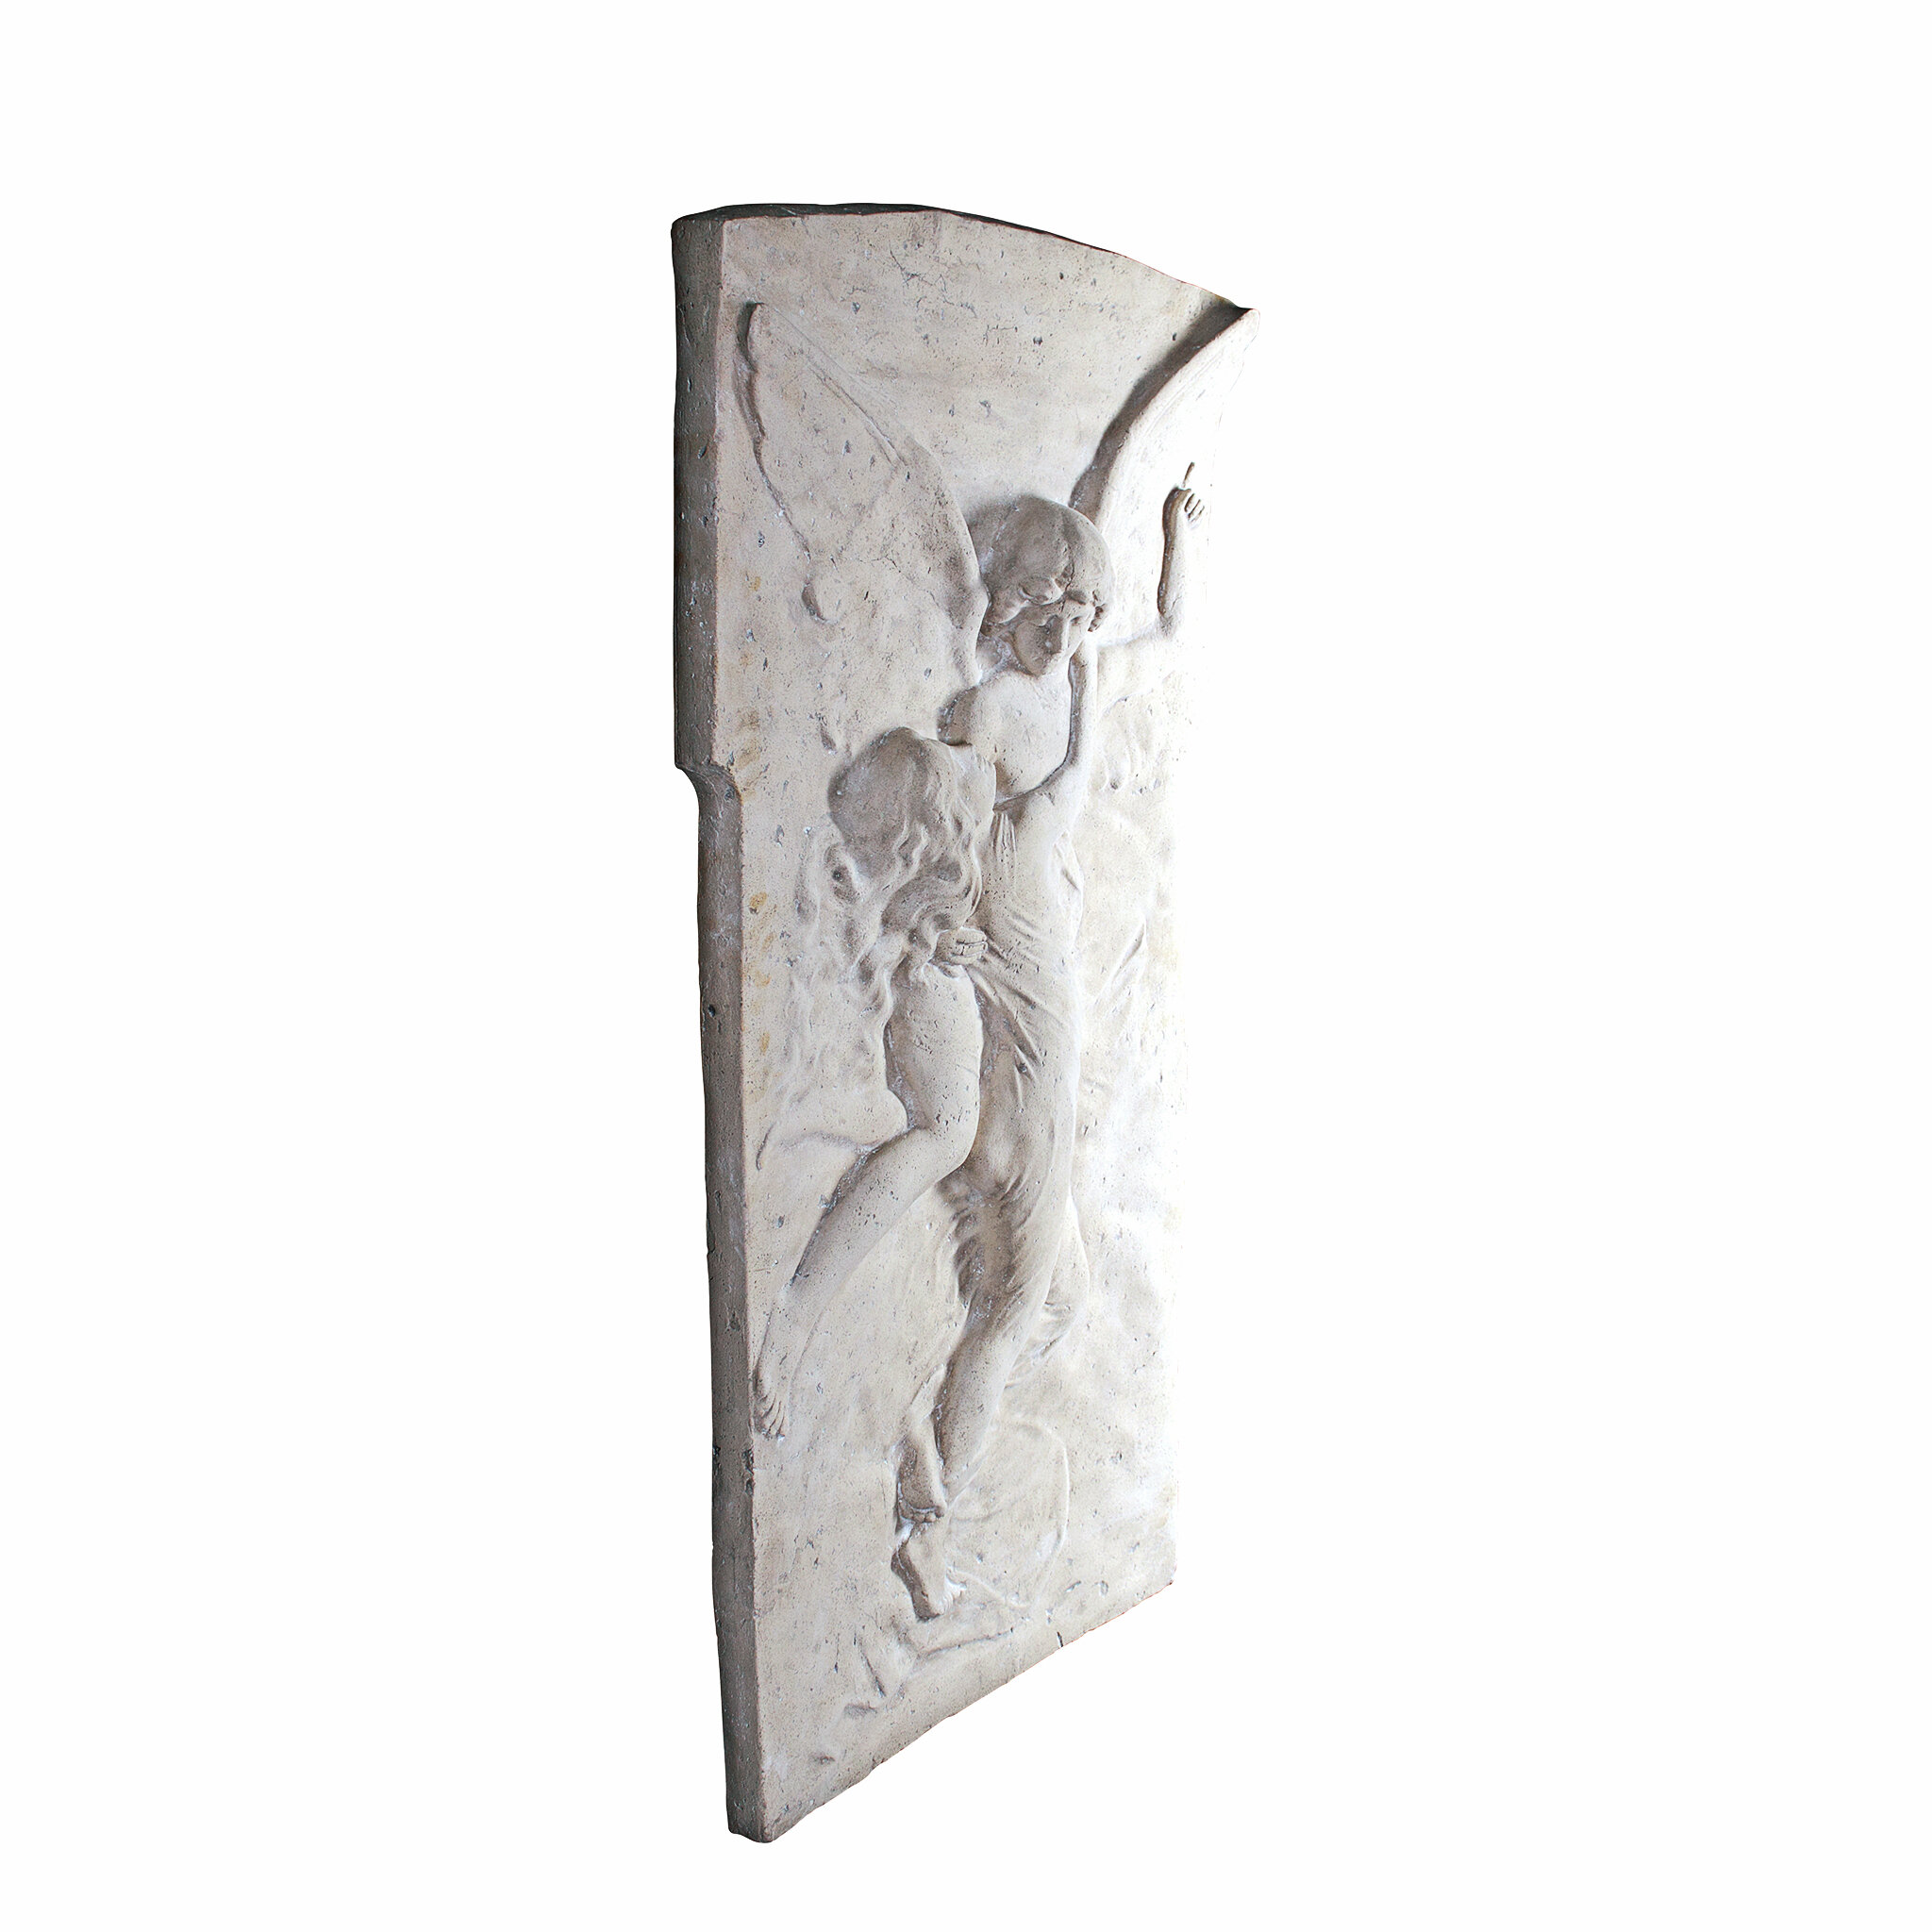 Design Toscano Cupid and Psyche Sculptural Wall Frieze 